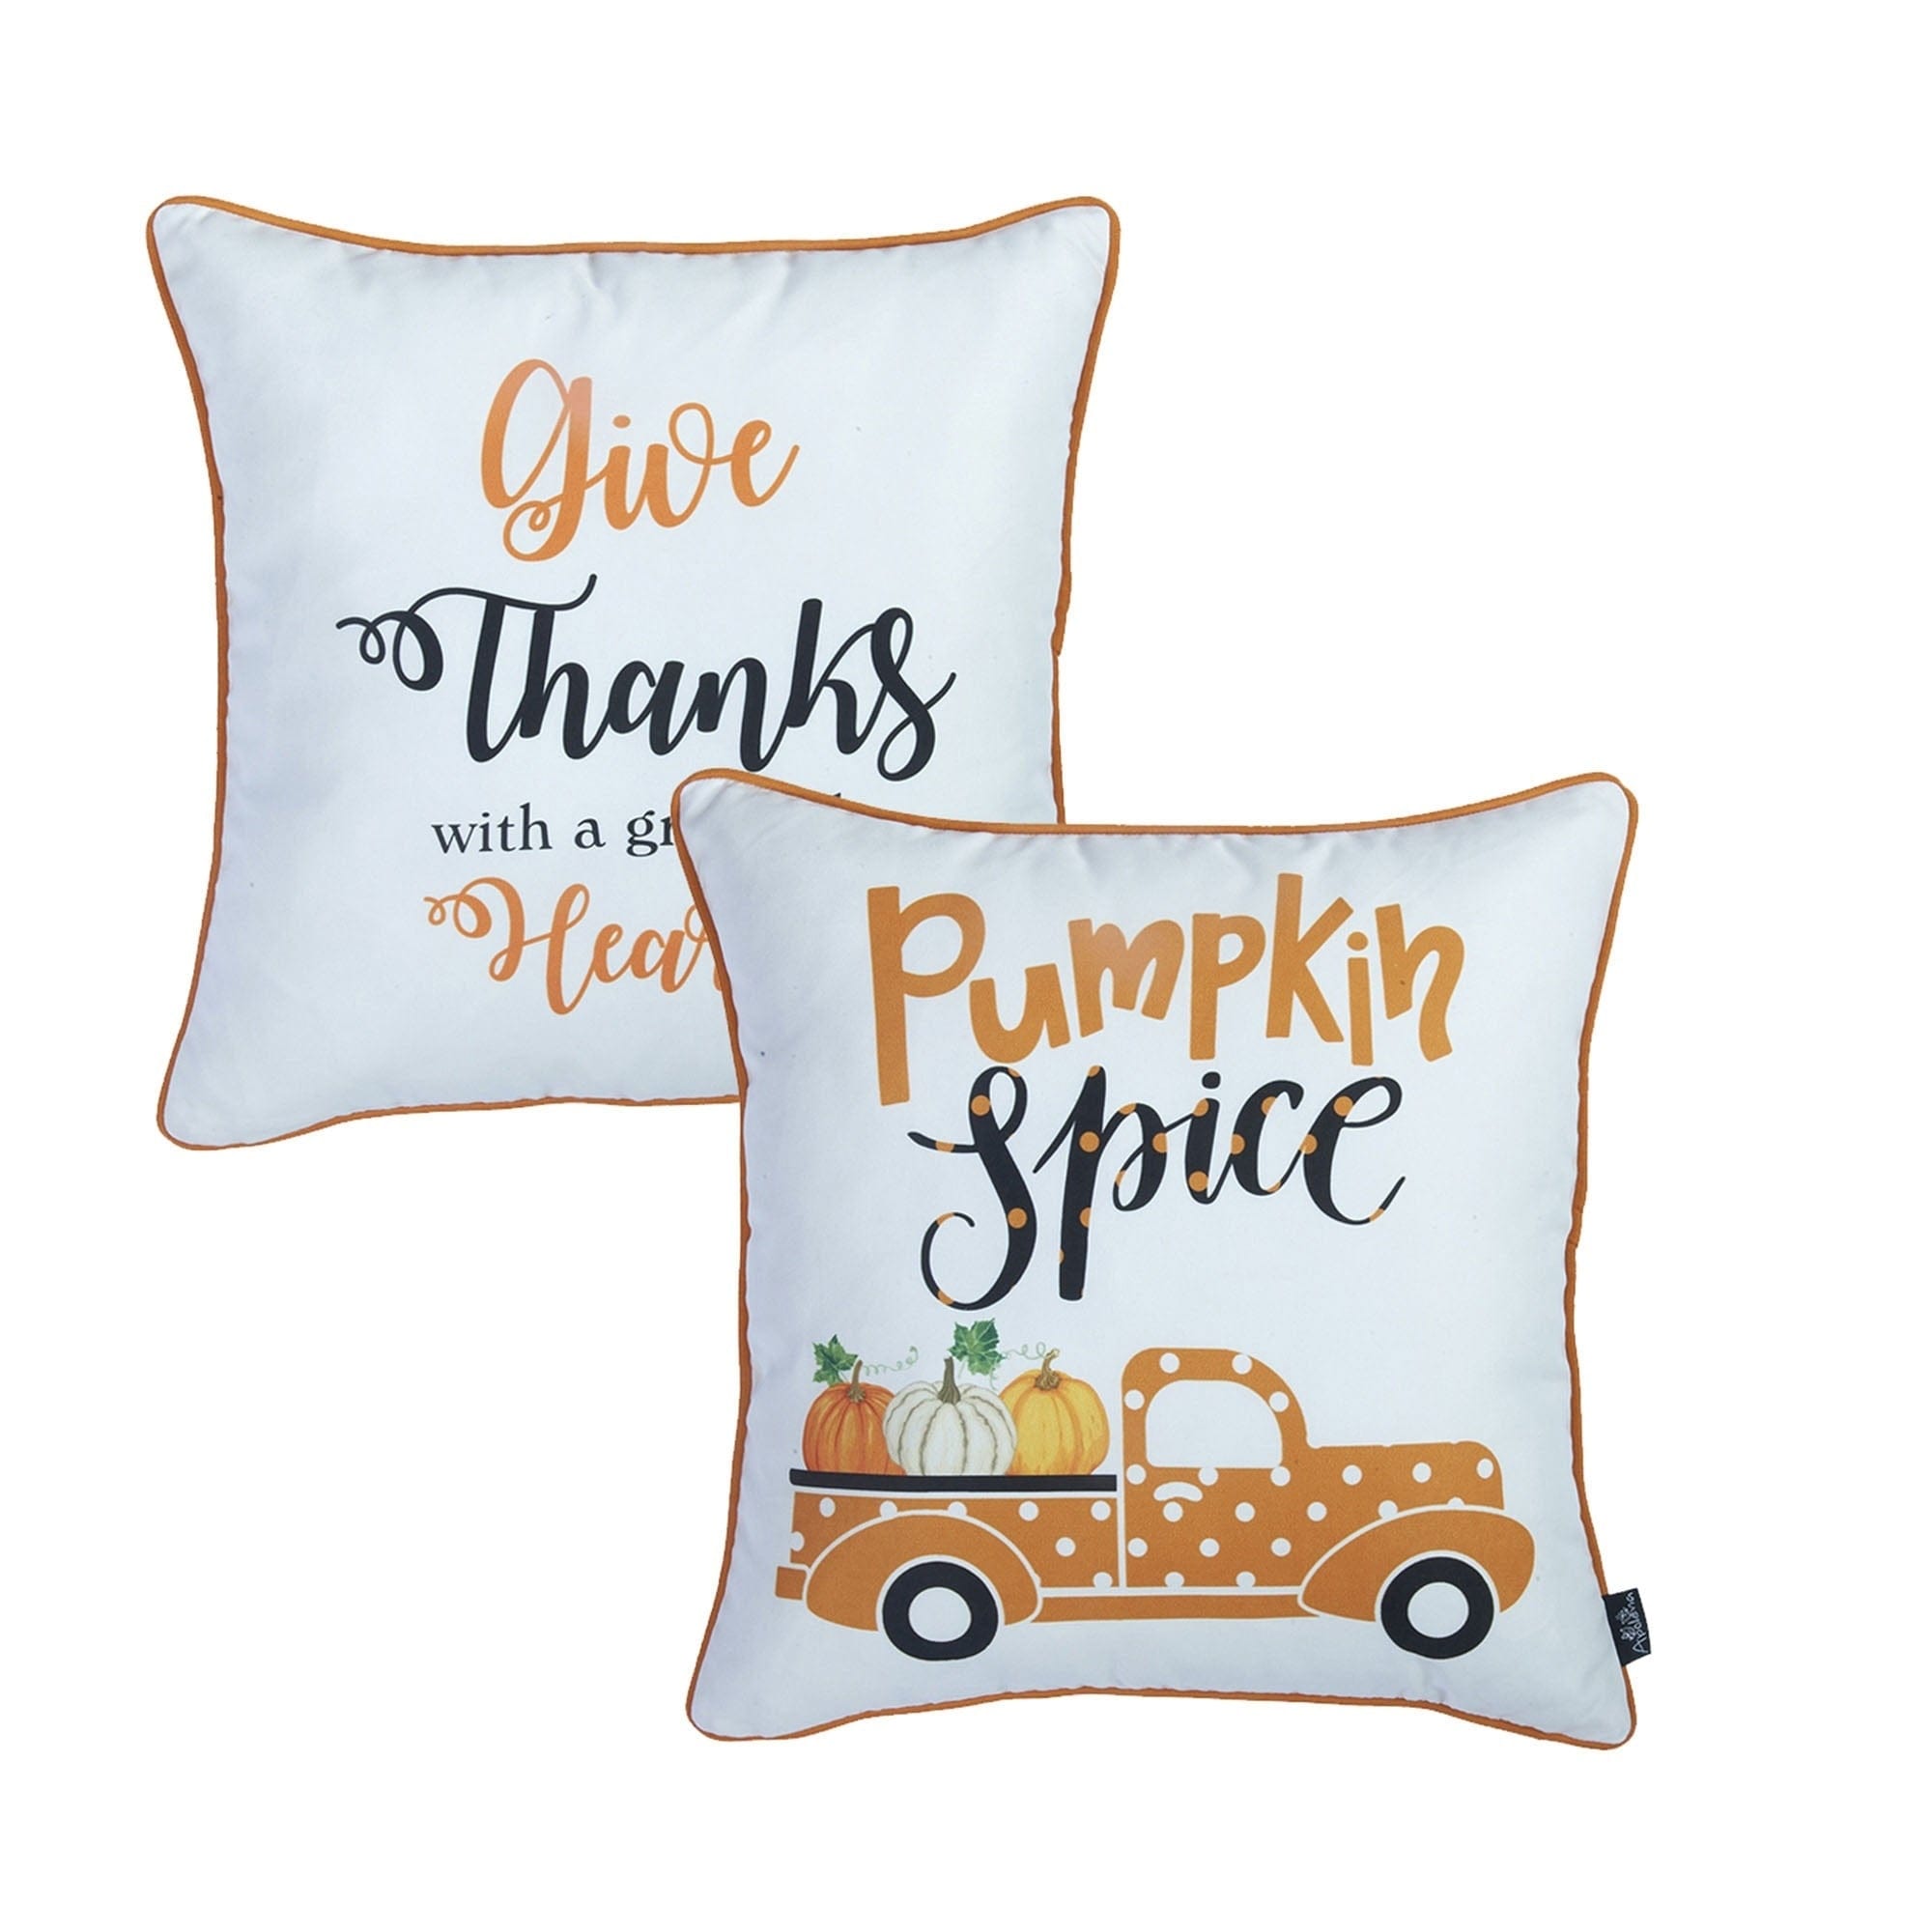 https://ak1.ostkcdn.com/images/products/is/images/direct/d3c9b28c378d13db243eca7cf47a418b881acbbe/Decorative-Fall-Thanksgiving-Throw-Pillow-Cover-Pumpkin-Truck-Set-of-2.jpg